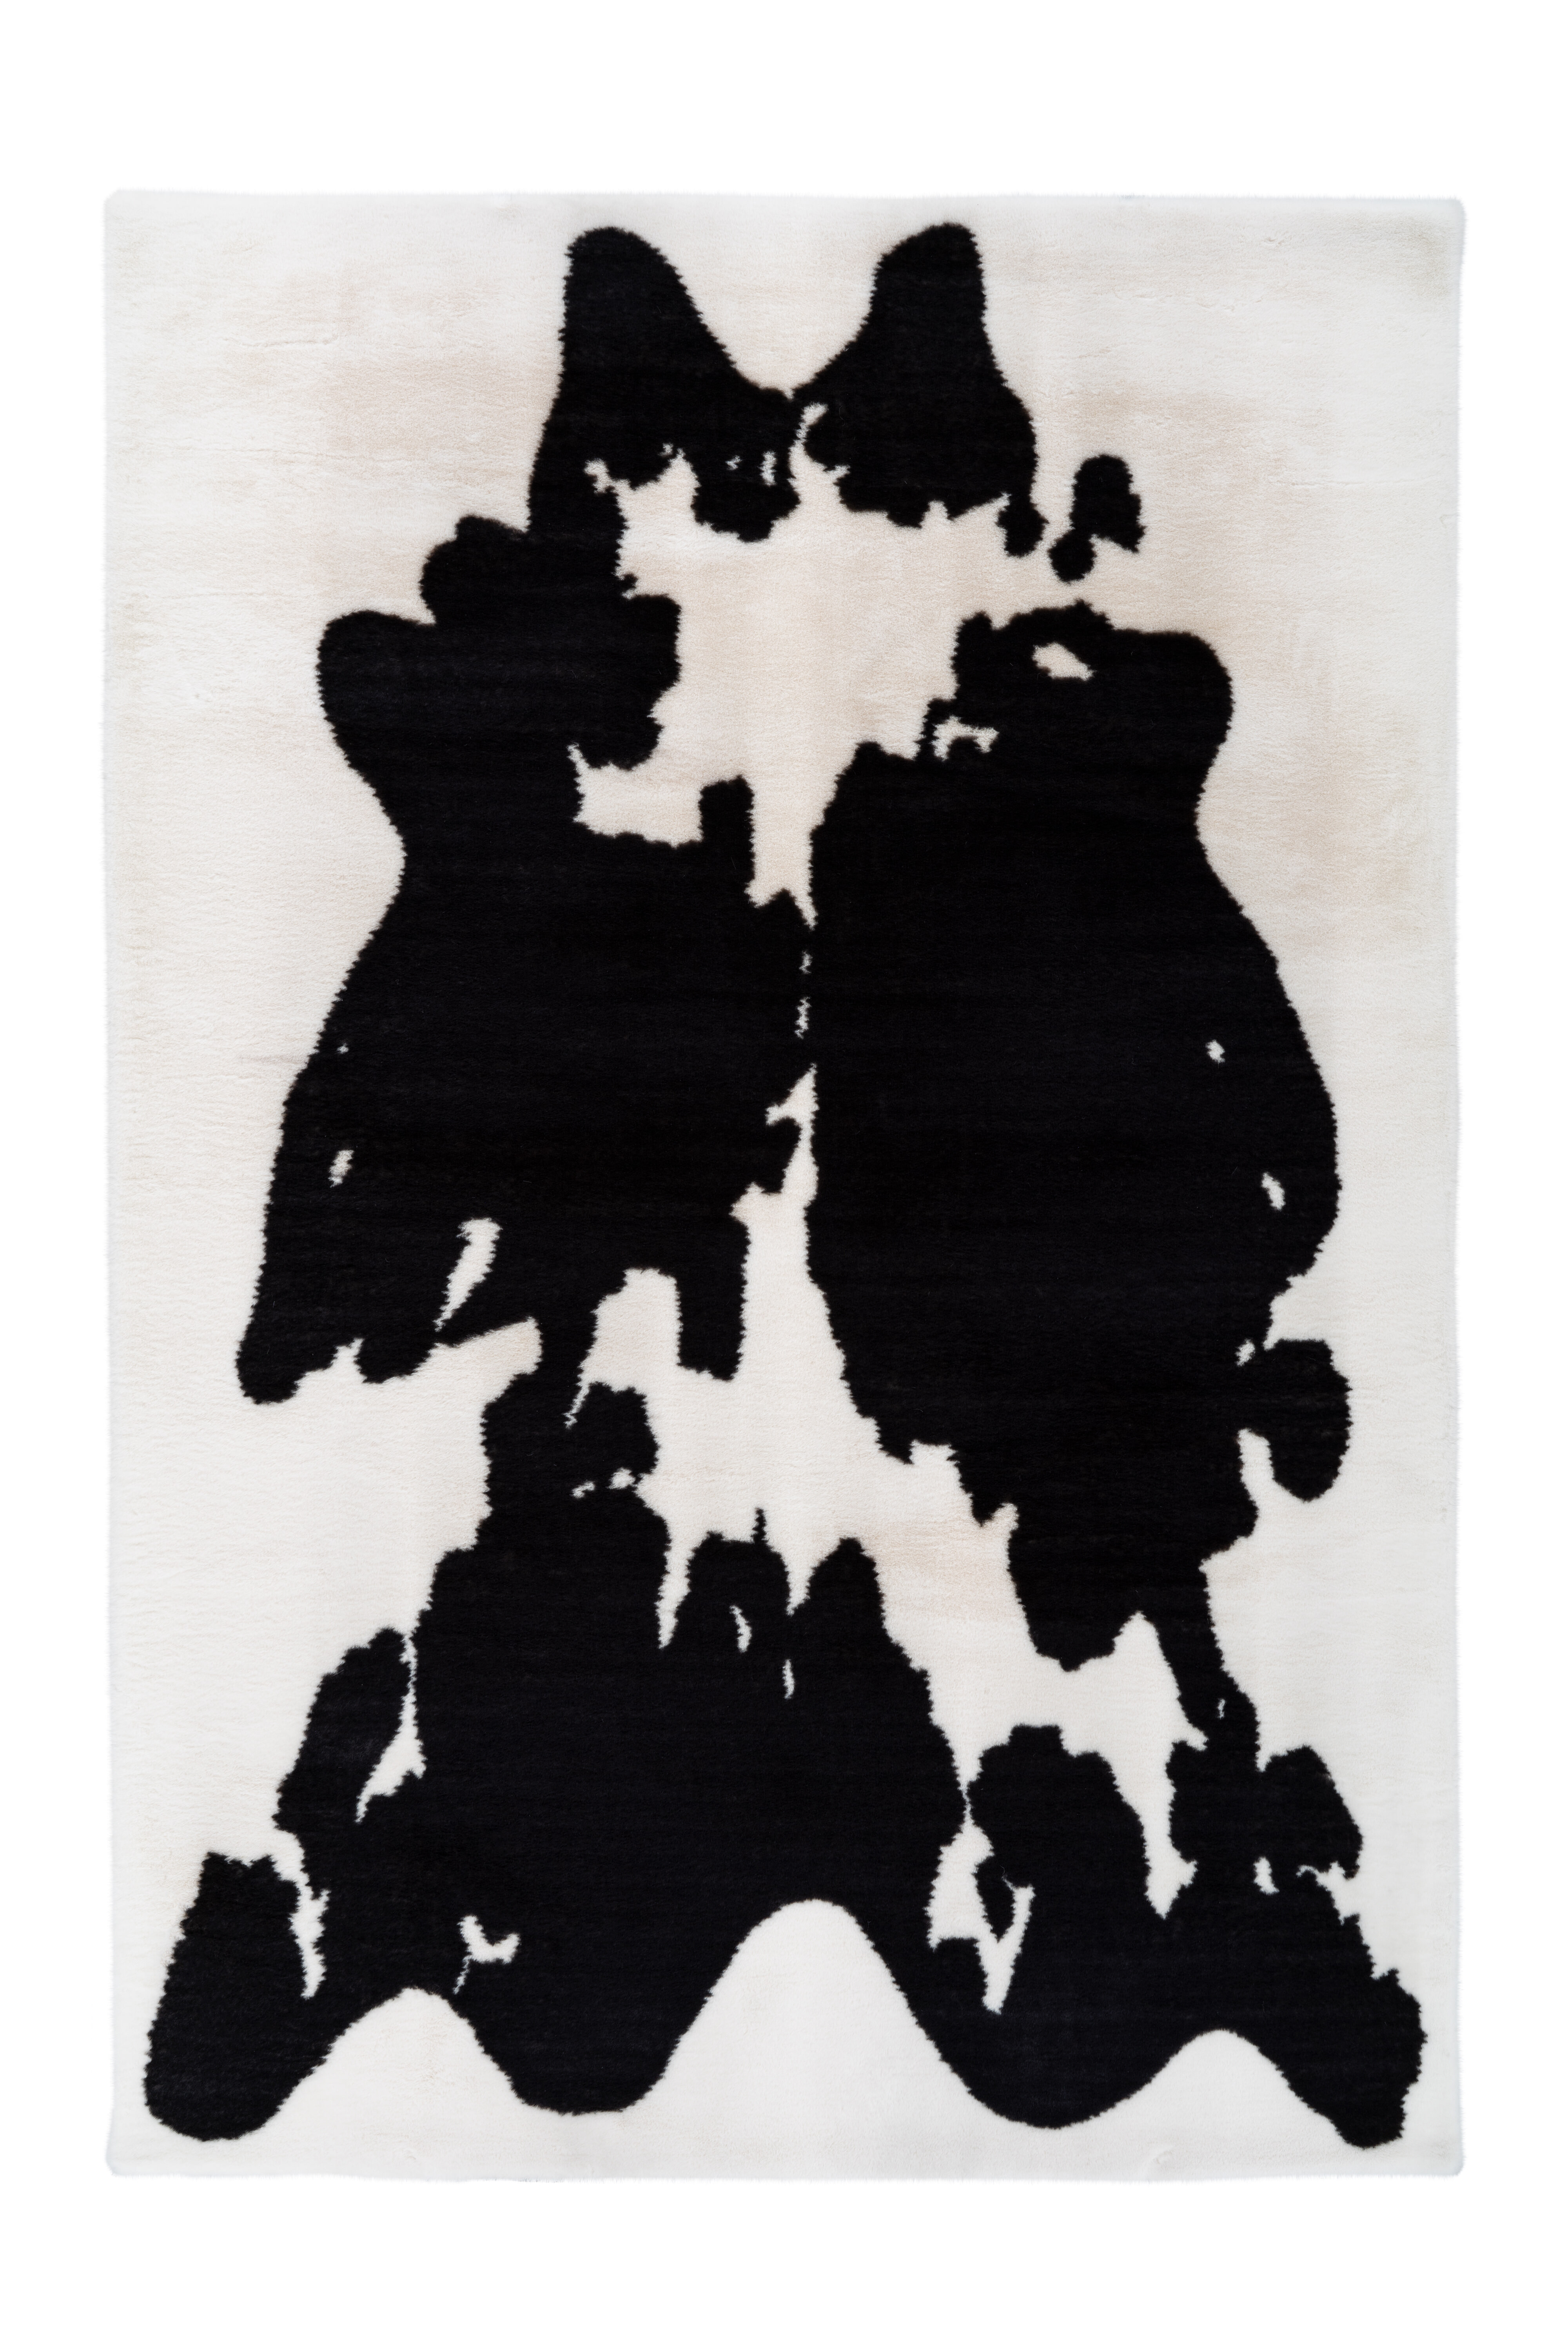 Kayoom Vloerkleed 'Rabbit Cow' kleur zwart / wit, 120 x 160cm